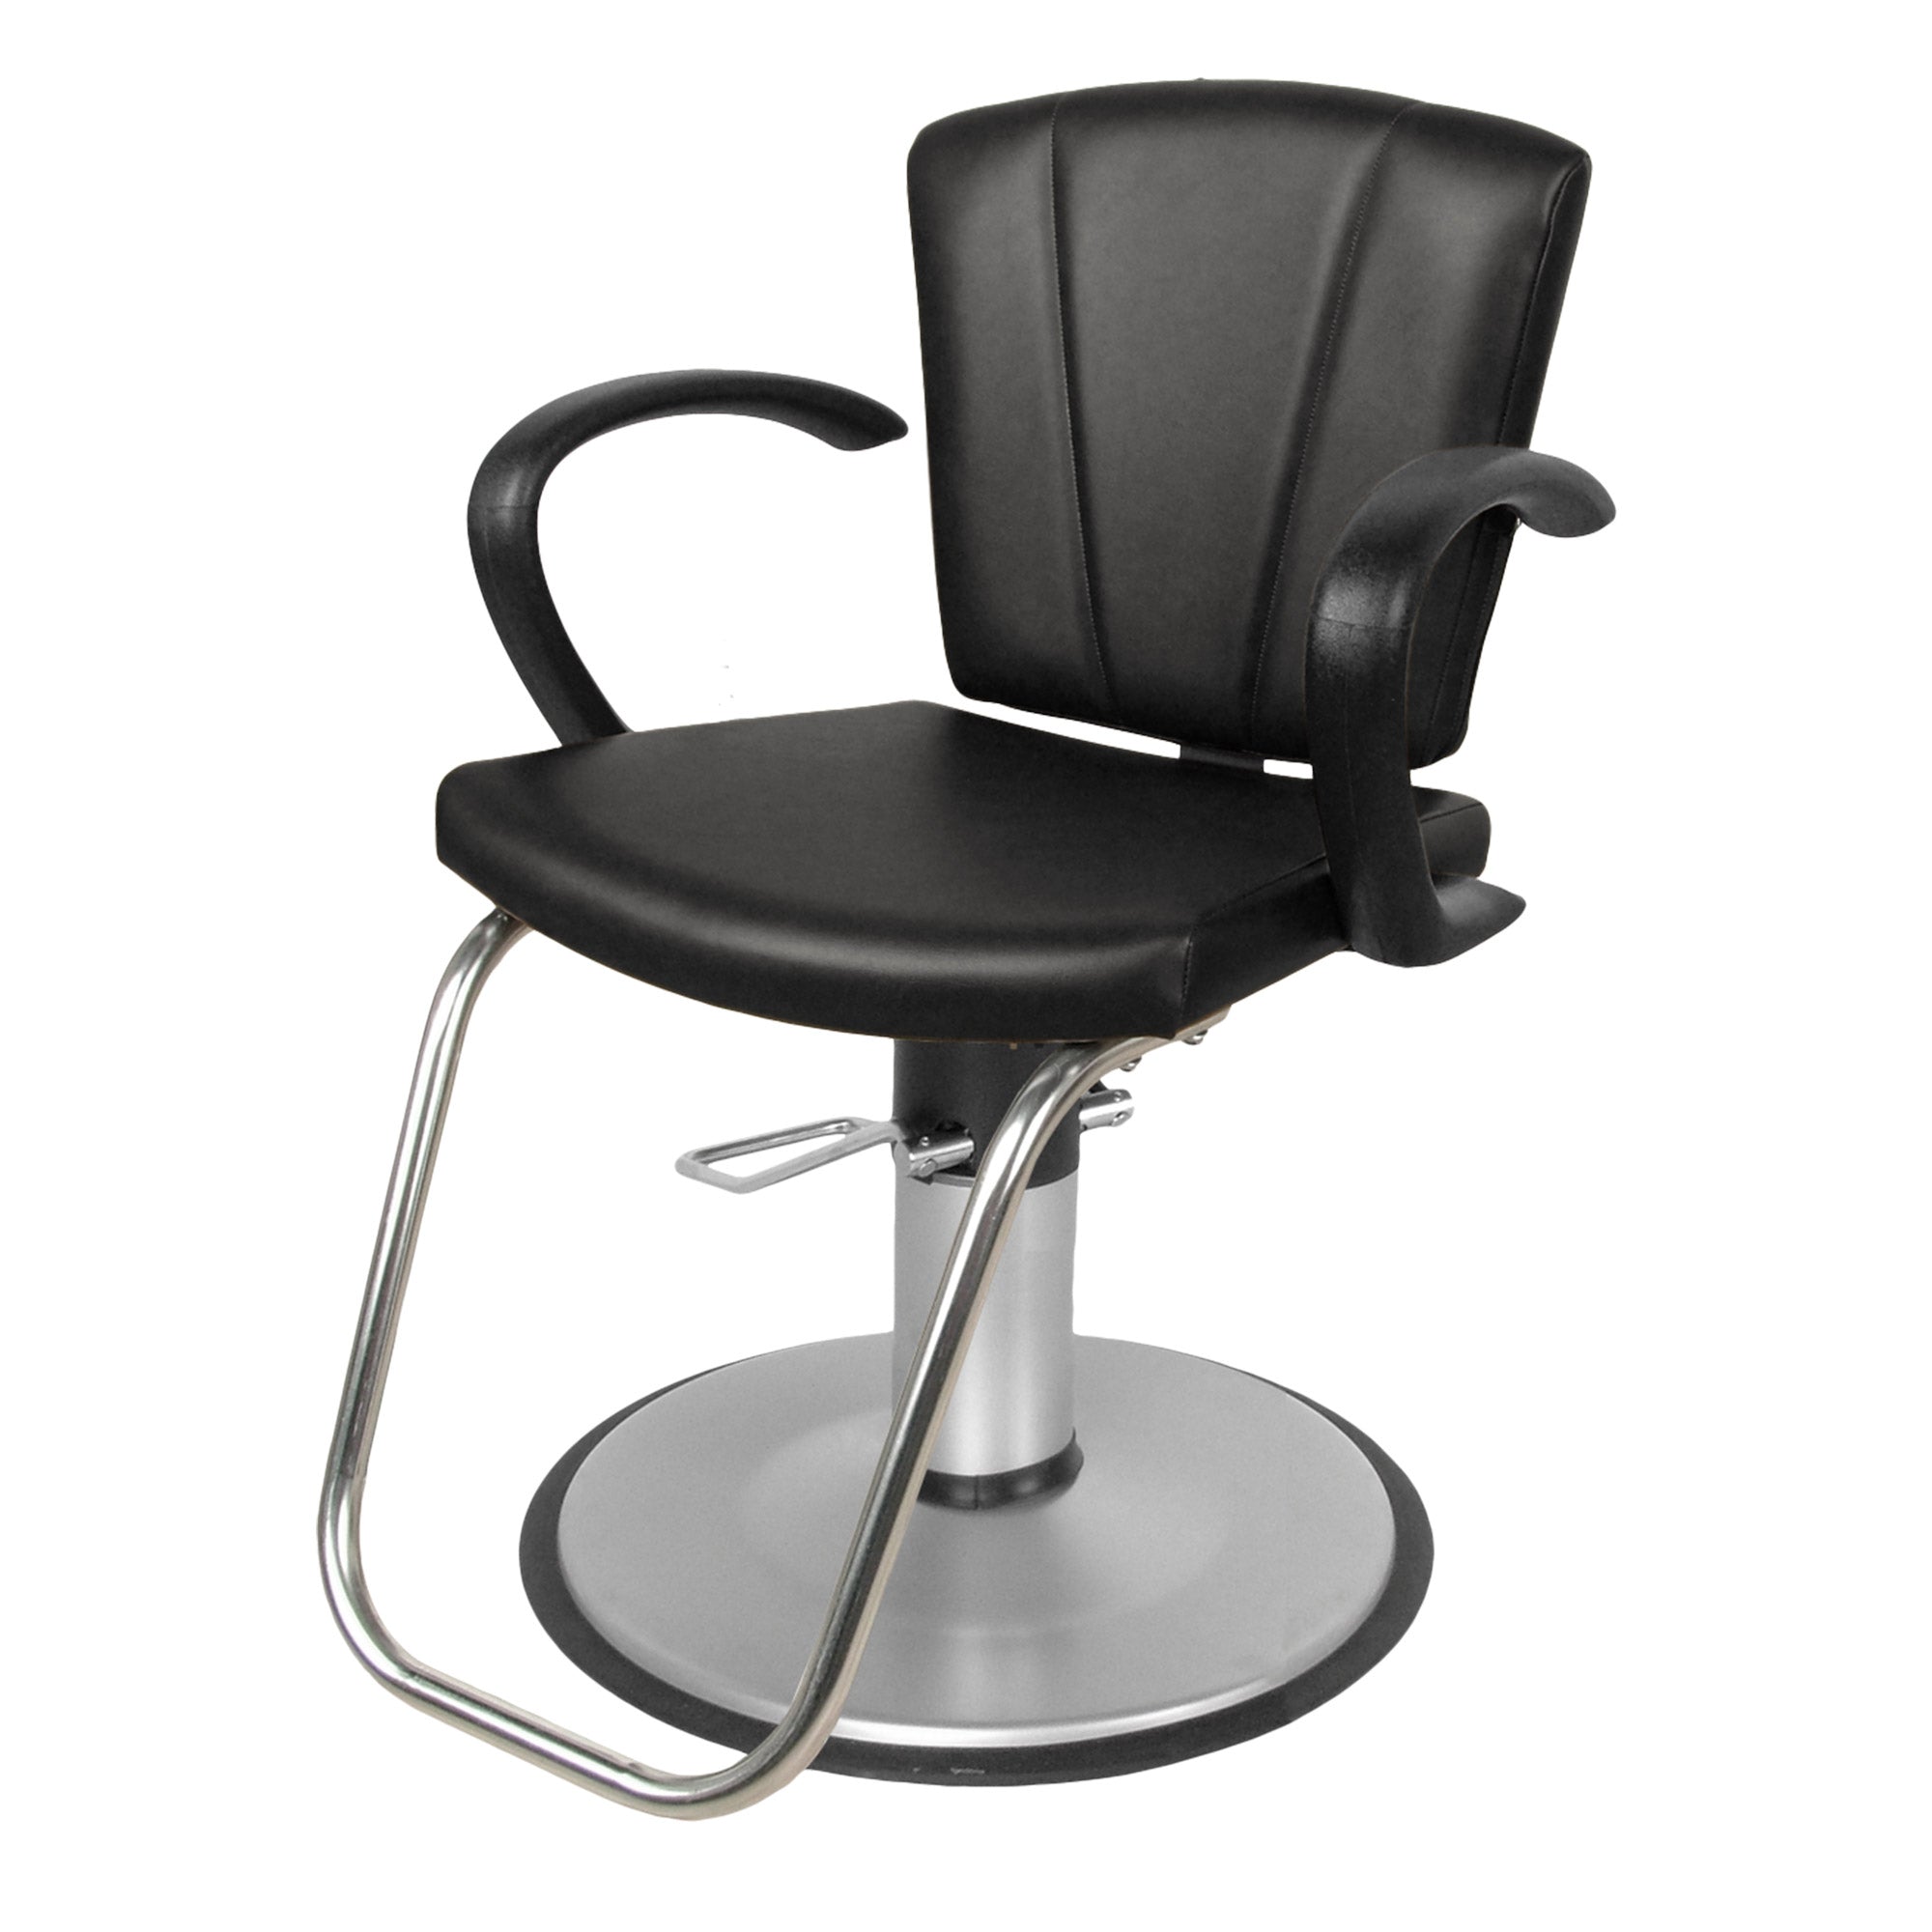 Sean Patrick Styling Chair